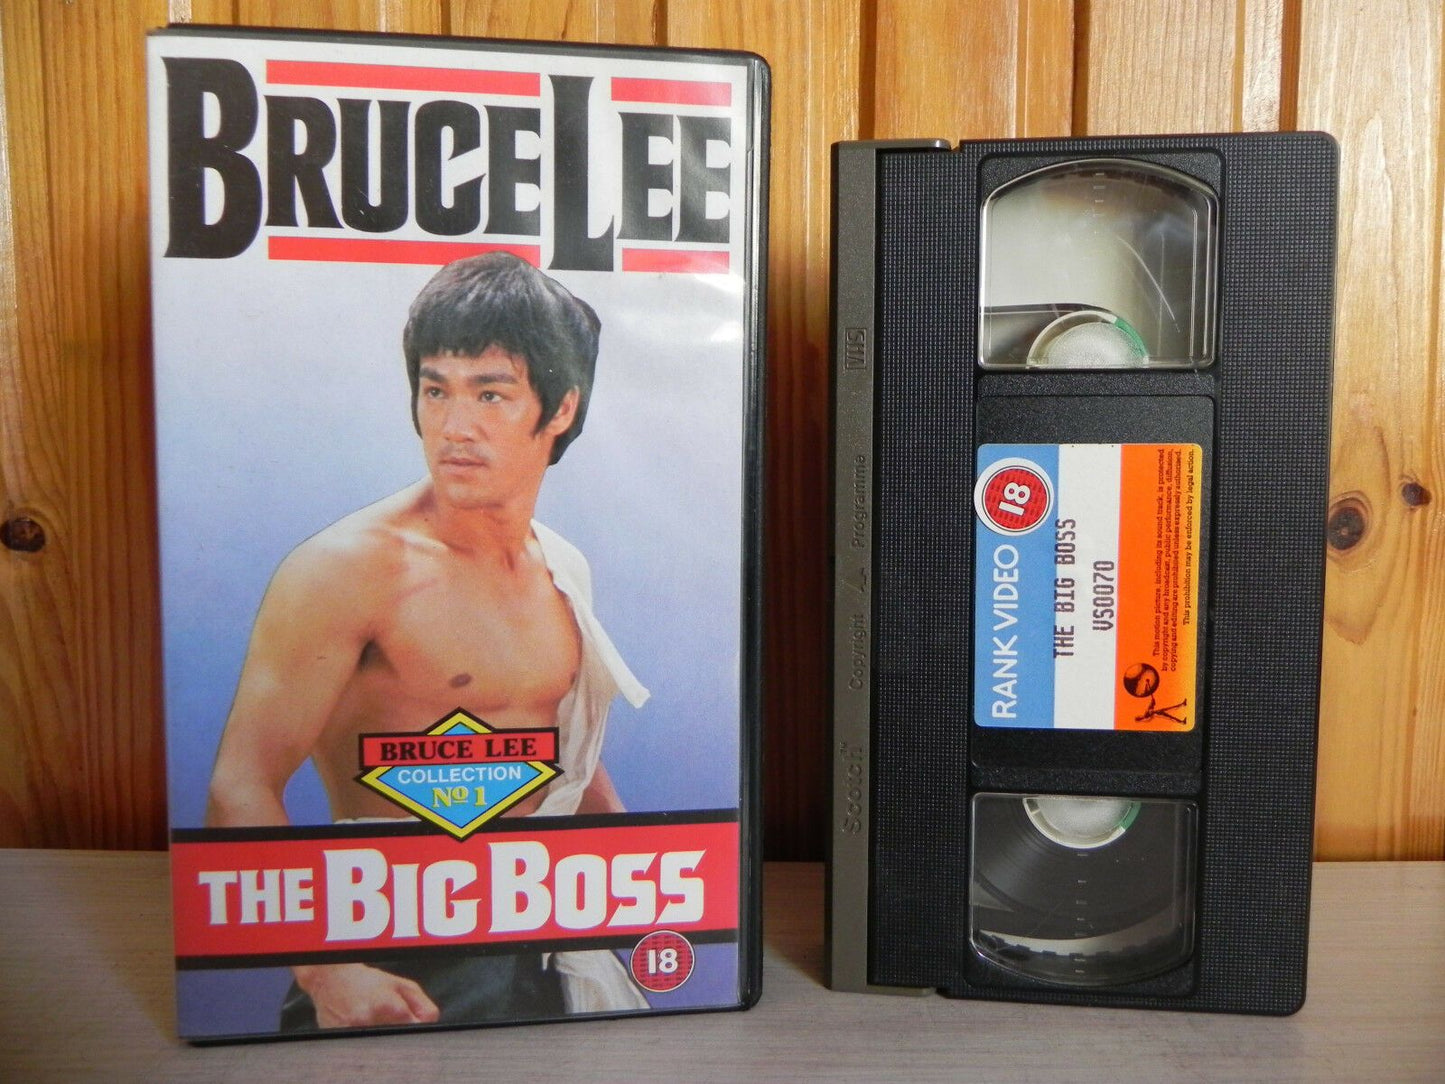 The Big Boss (1971); [Rank] - Martial Arts - Bruce Lee / James Tein - Pal VHS-